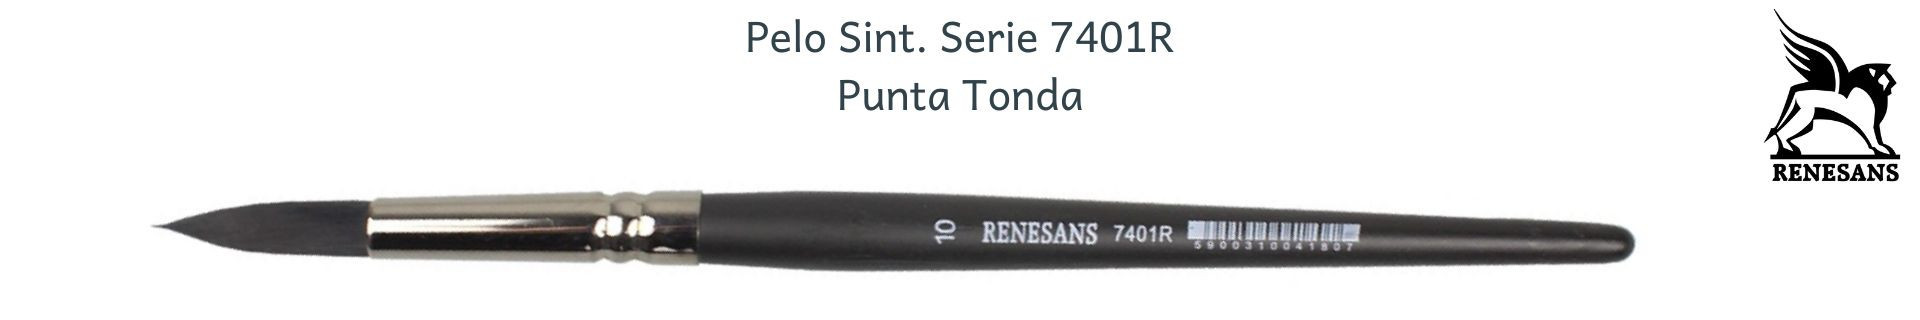 Renesans Serie 7401R Tondi